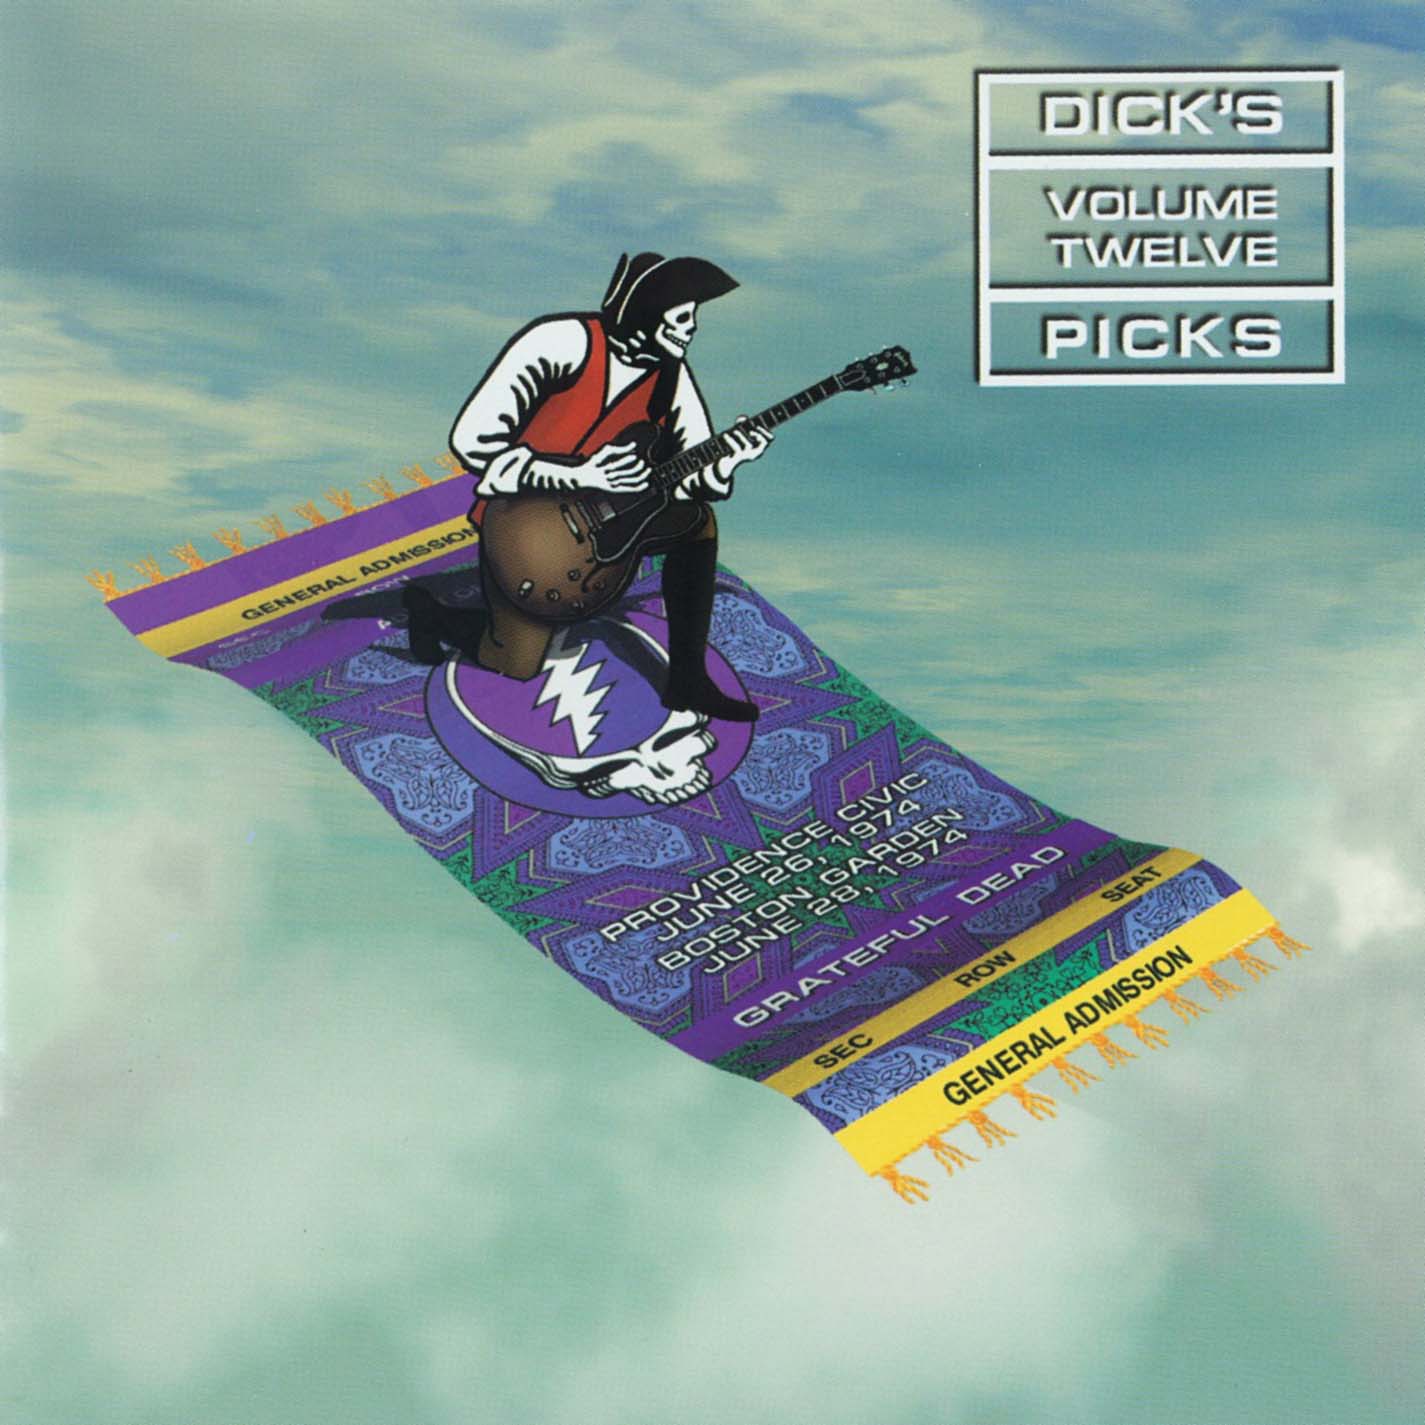 Grateful Dead Dick's Picks 12 album cover artwork